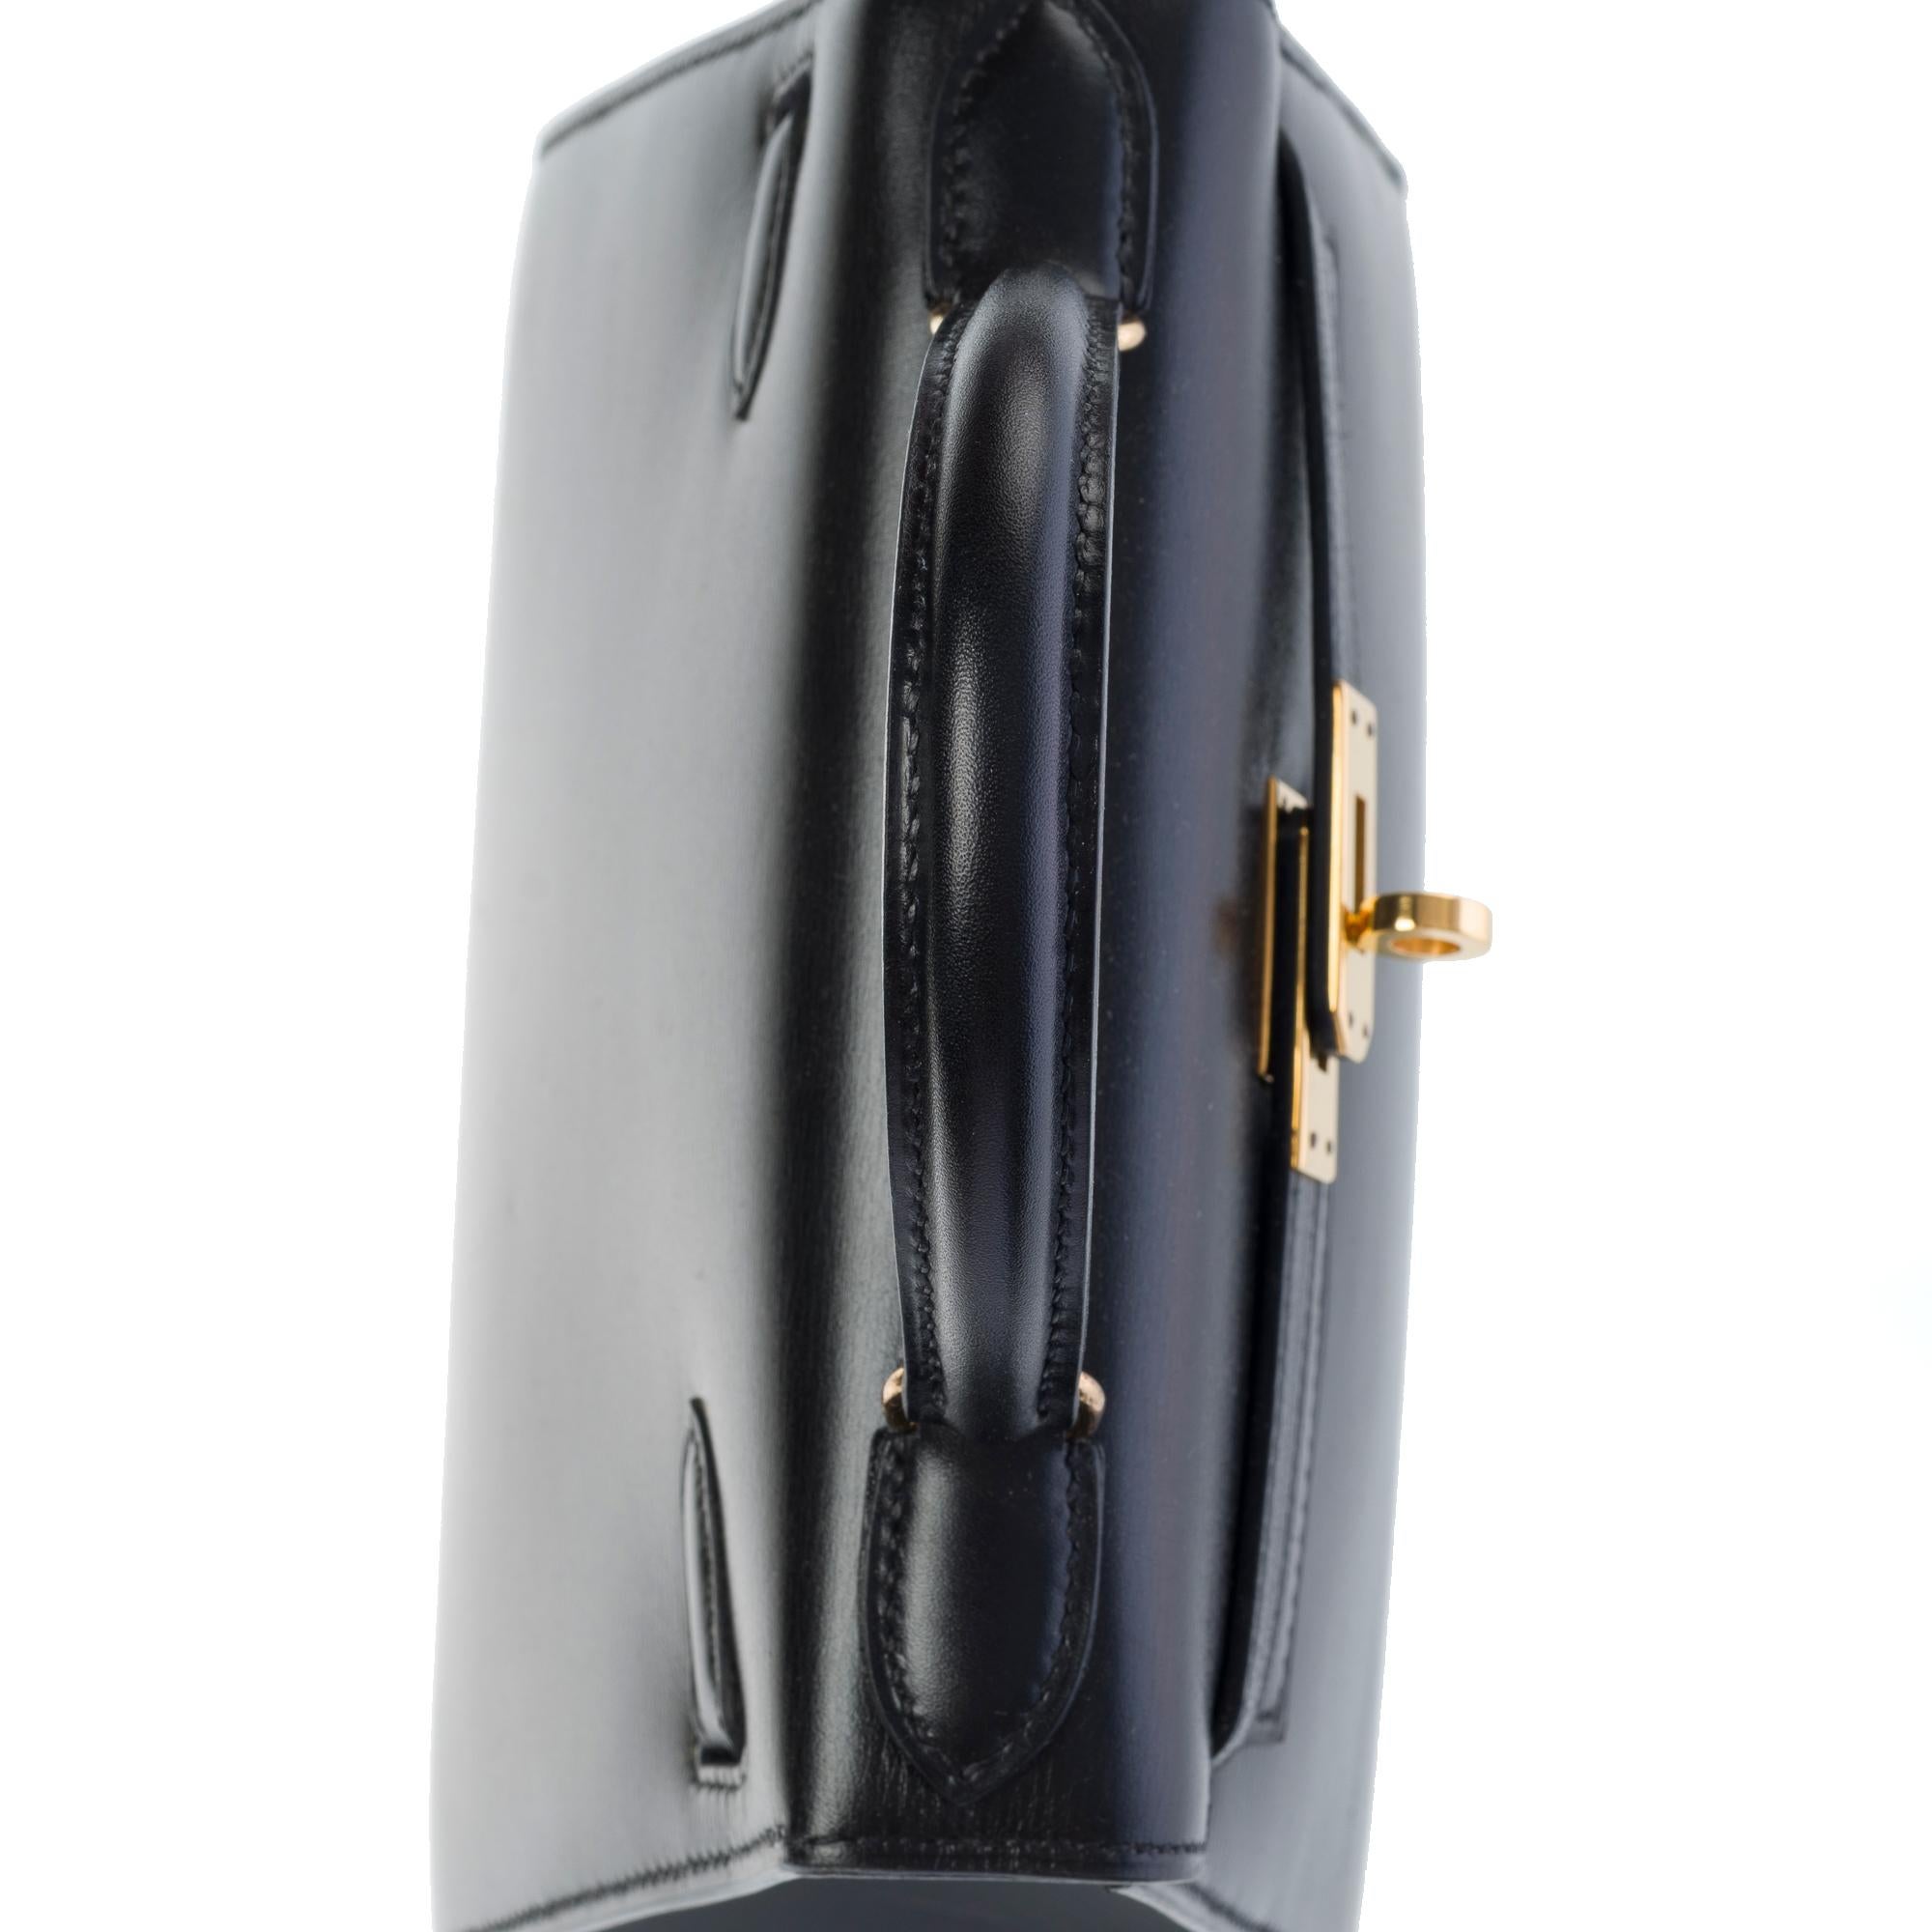 Rare Hermès Mini Kelly 20cm handbag double strap in black box calfskin, GHW 5